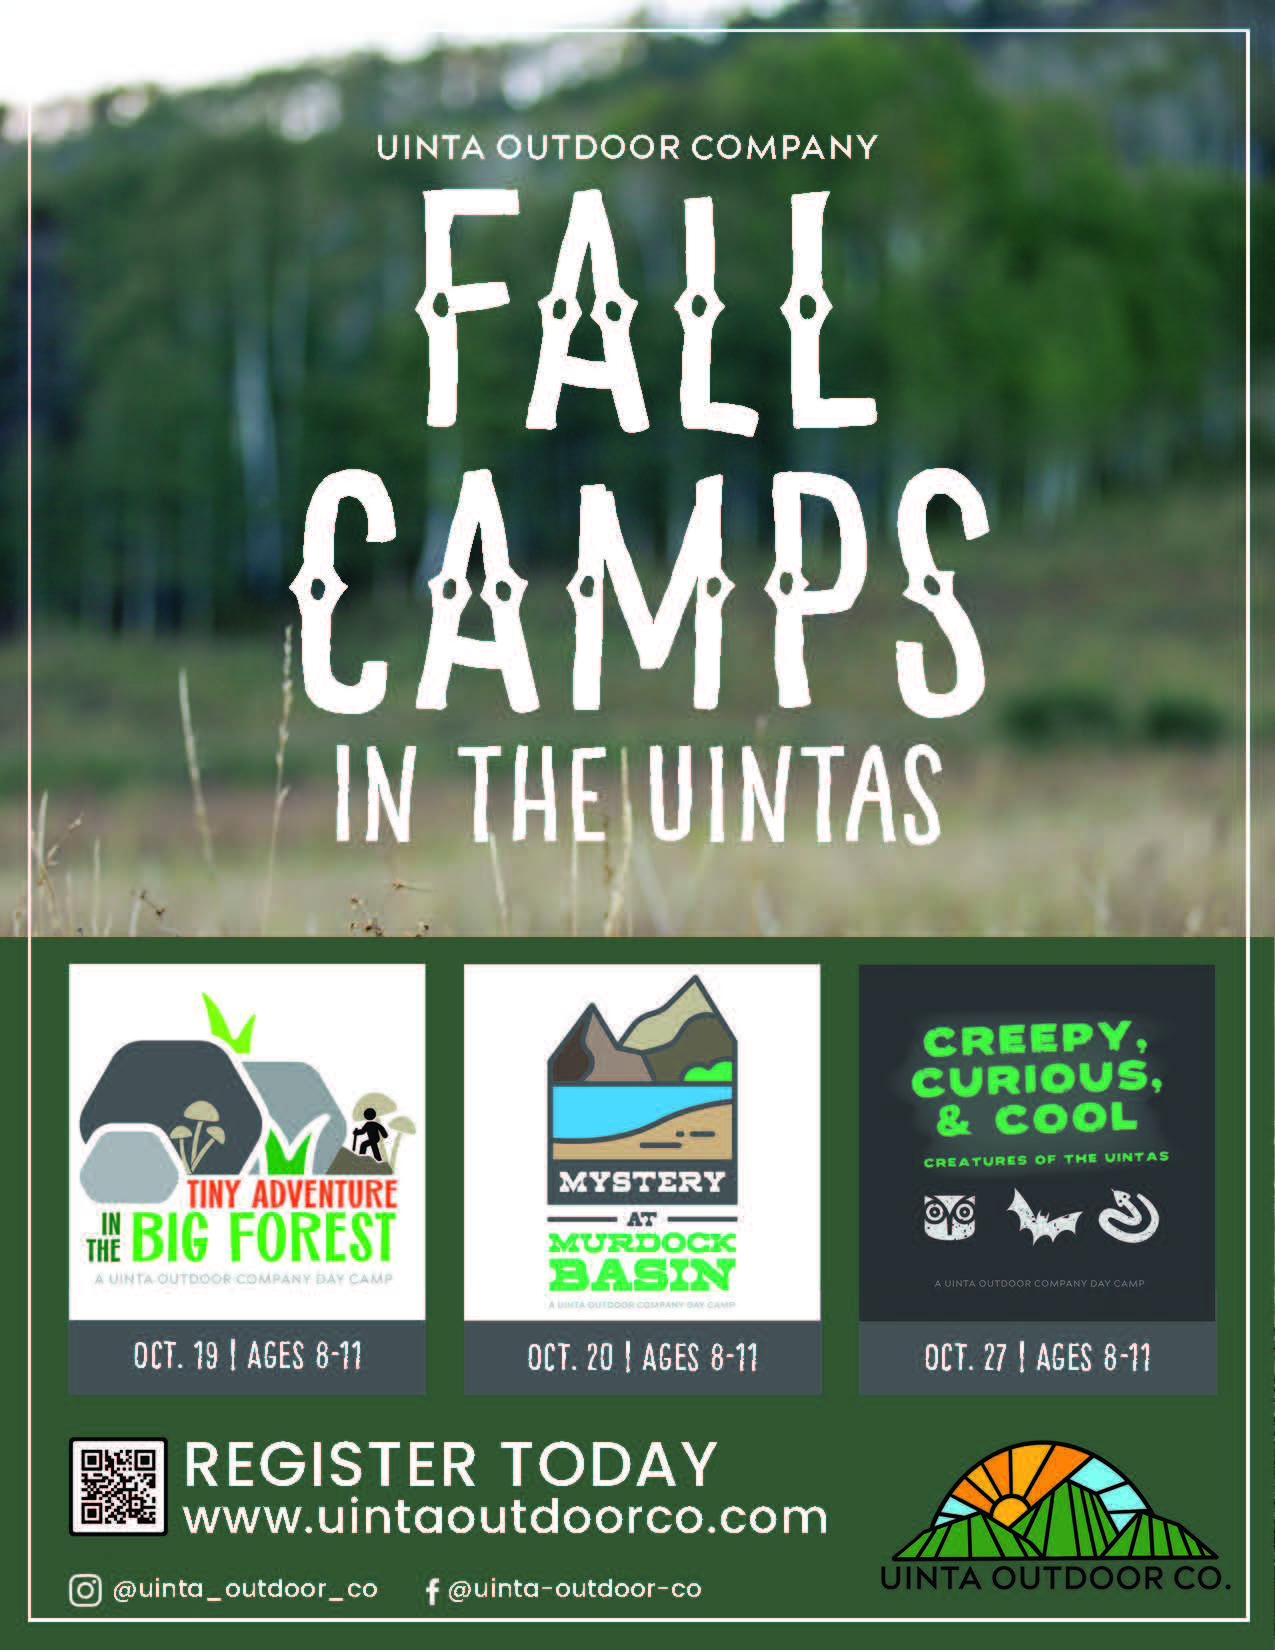 Uinta Outdoor Co. Fall Camps